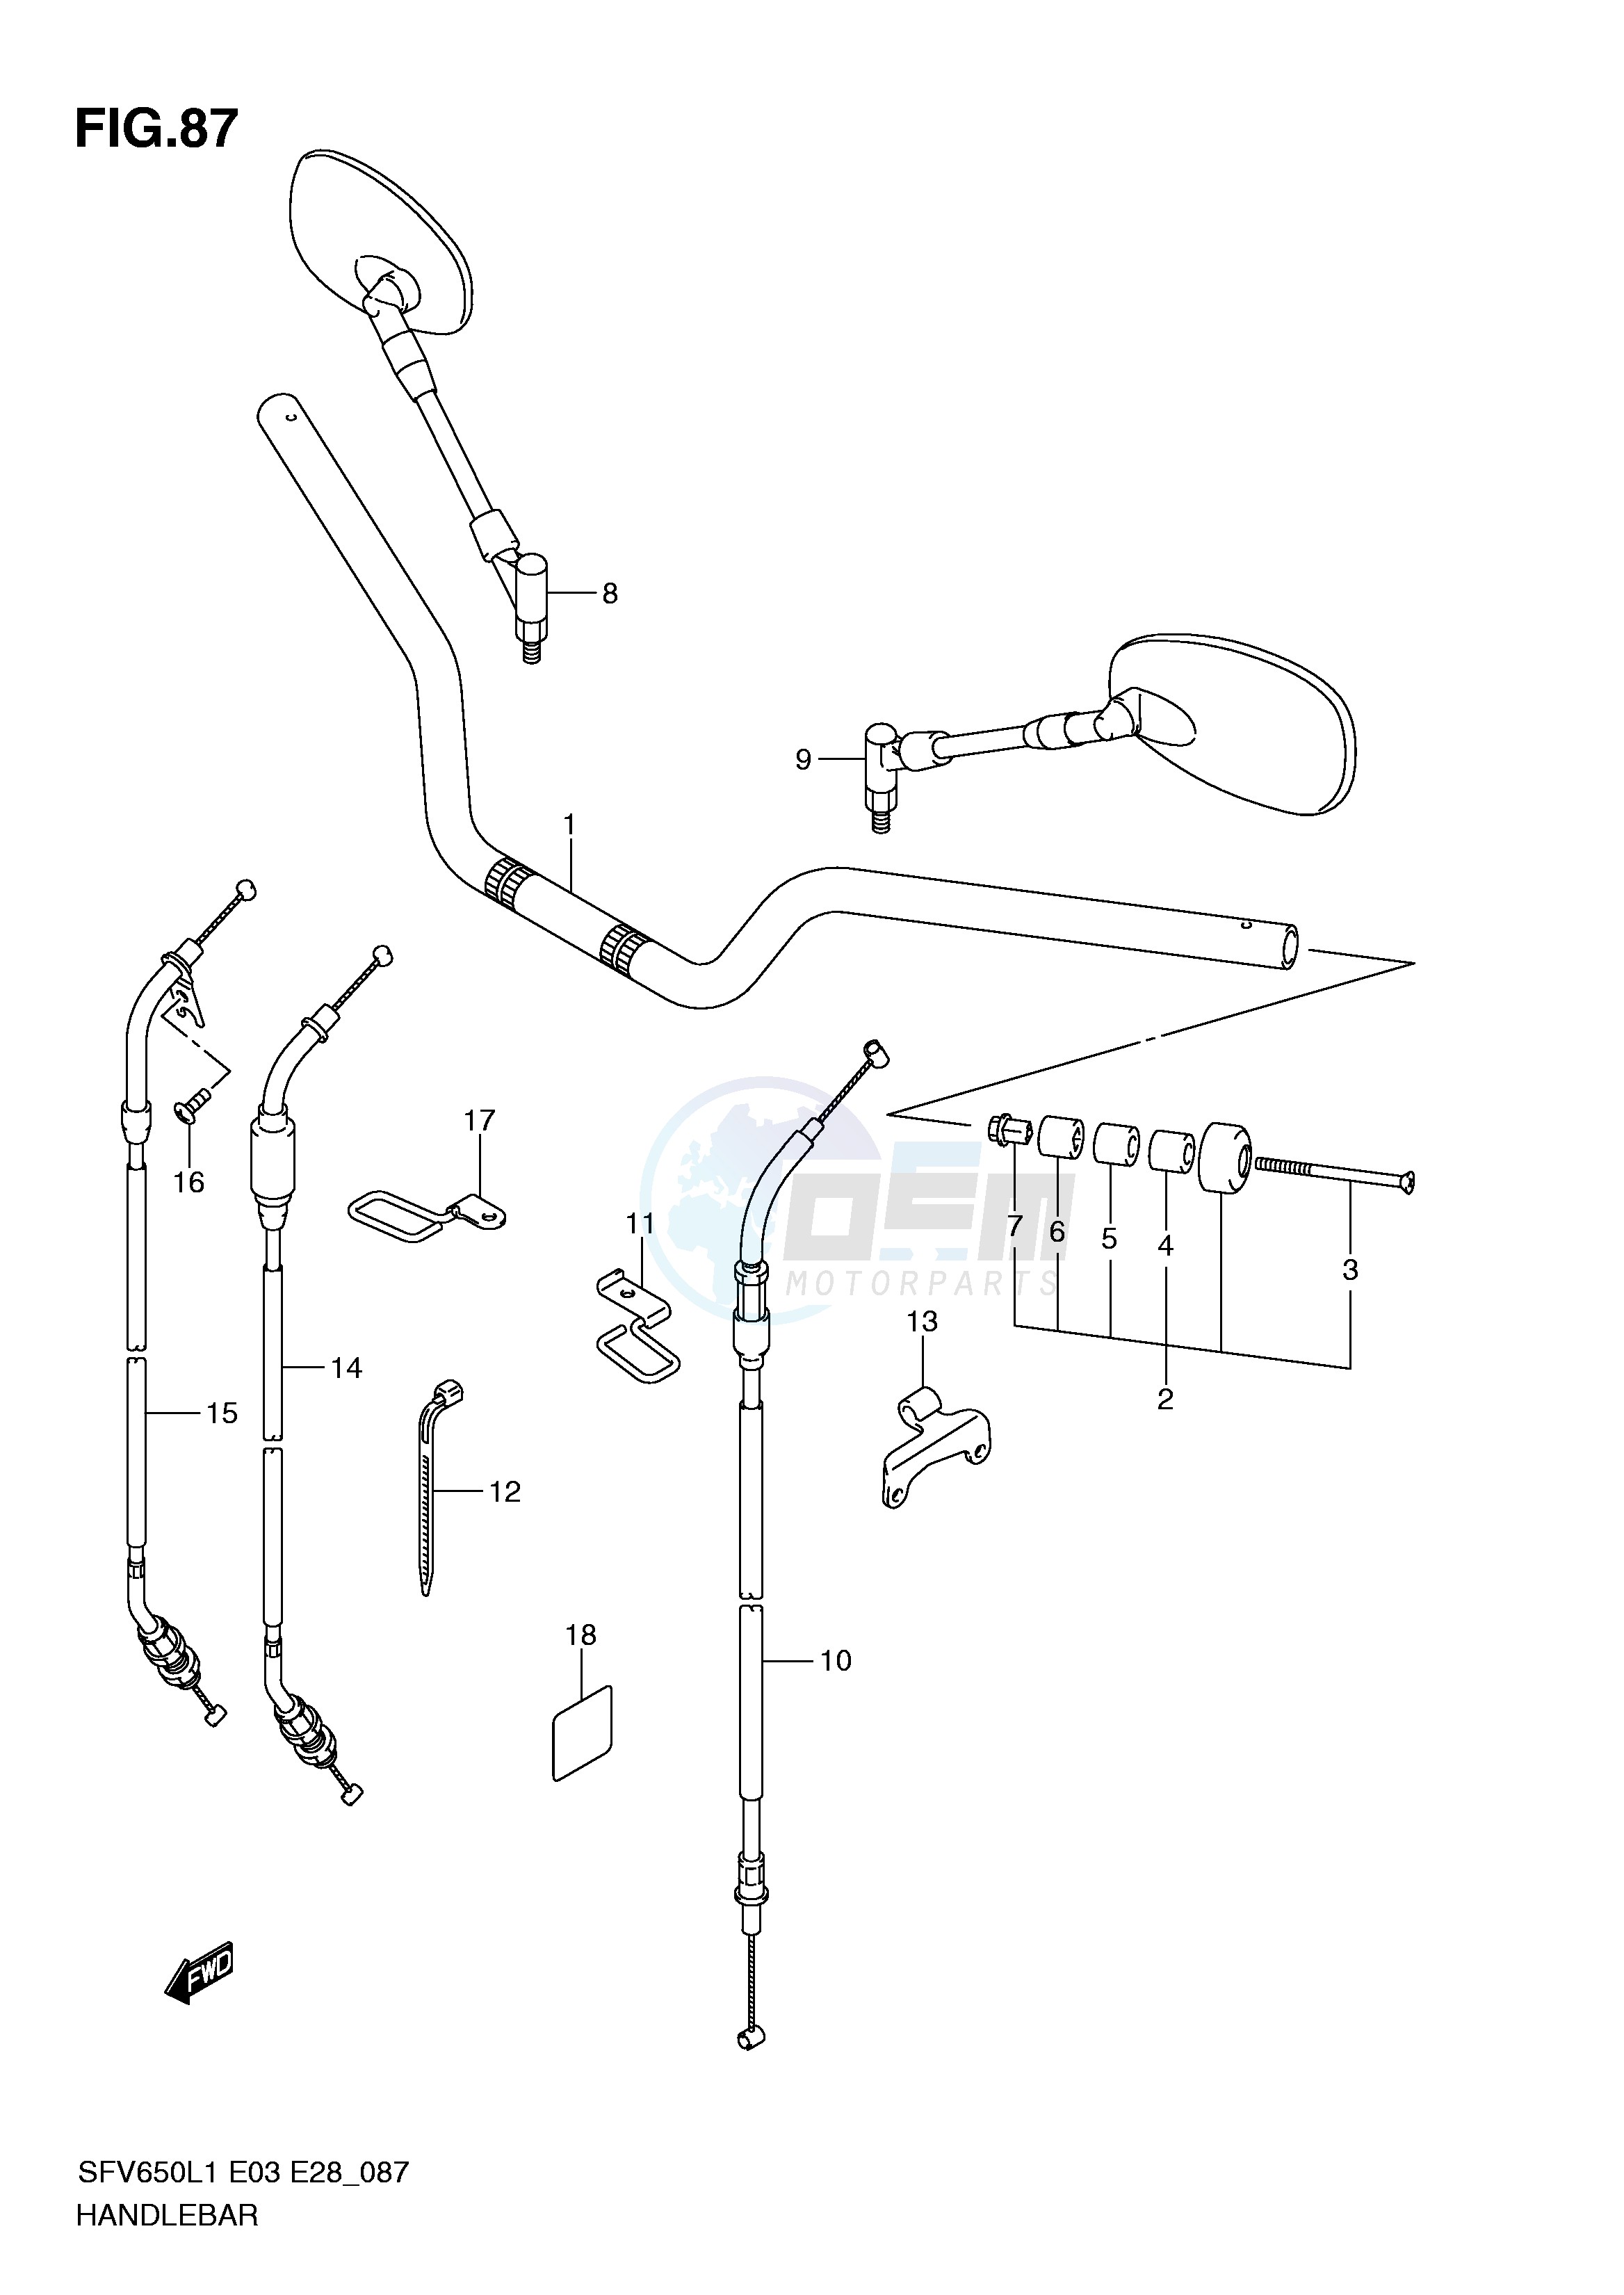 HANDLEBAR (SFV650L1 E3) blueprint